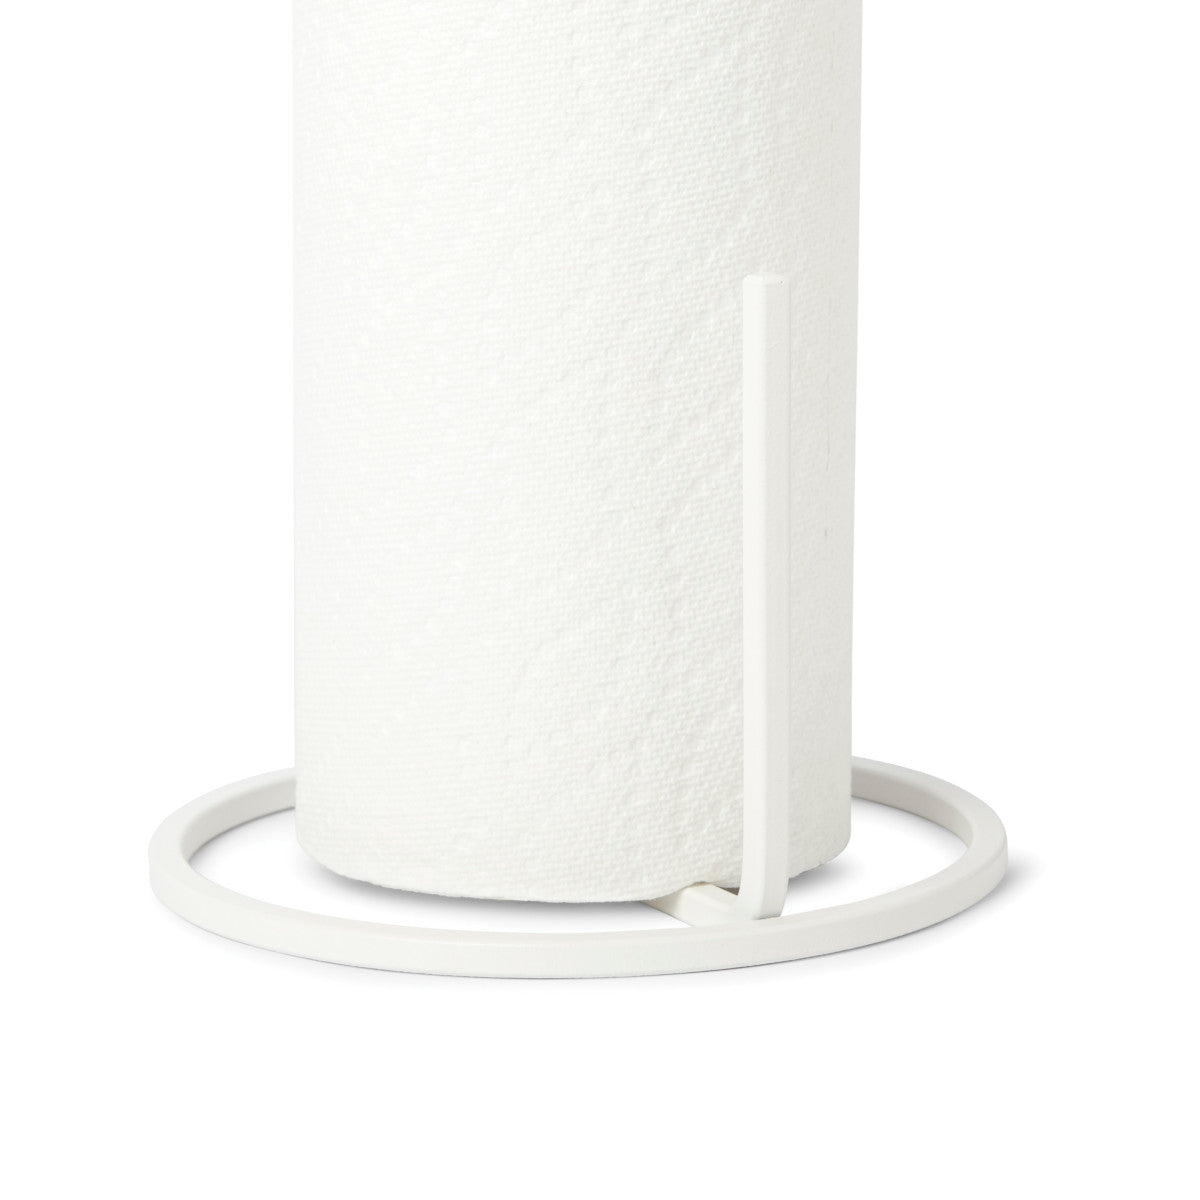 Umbra Squire Countertop Paper Towel Holder